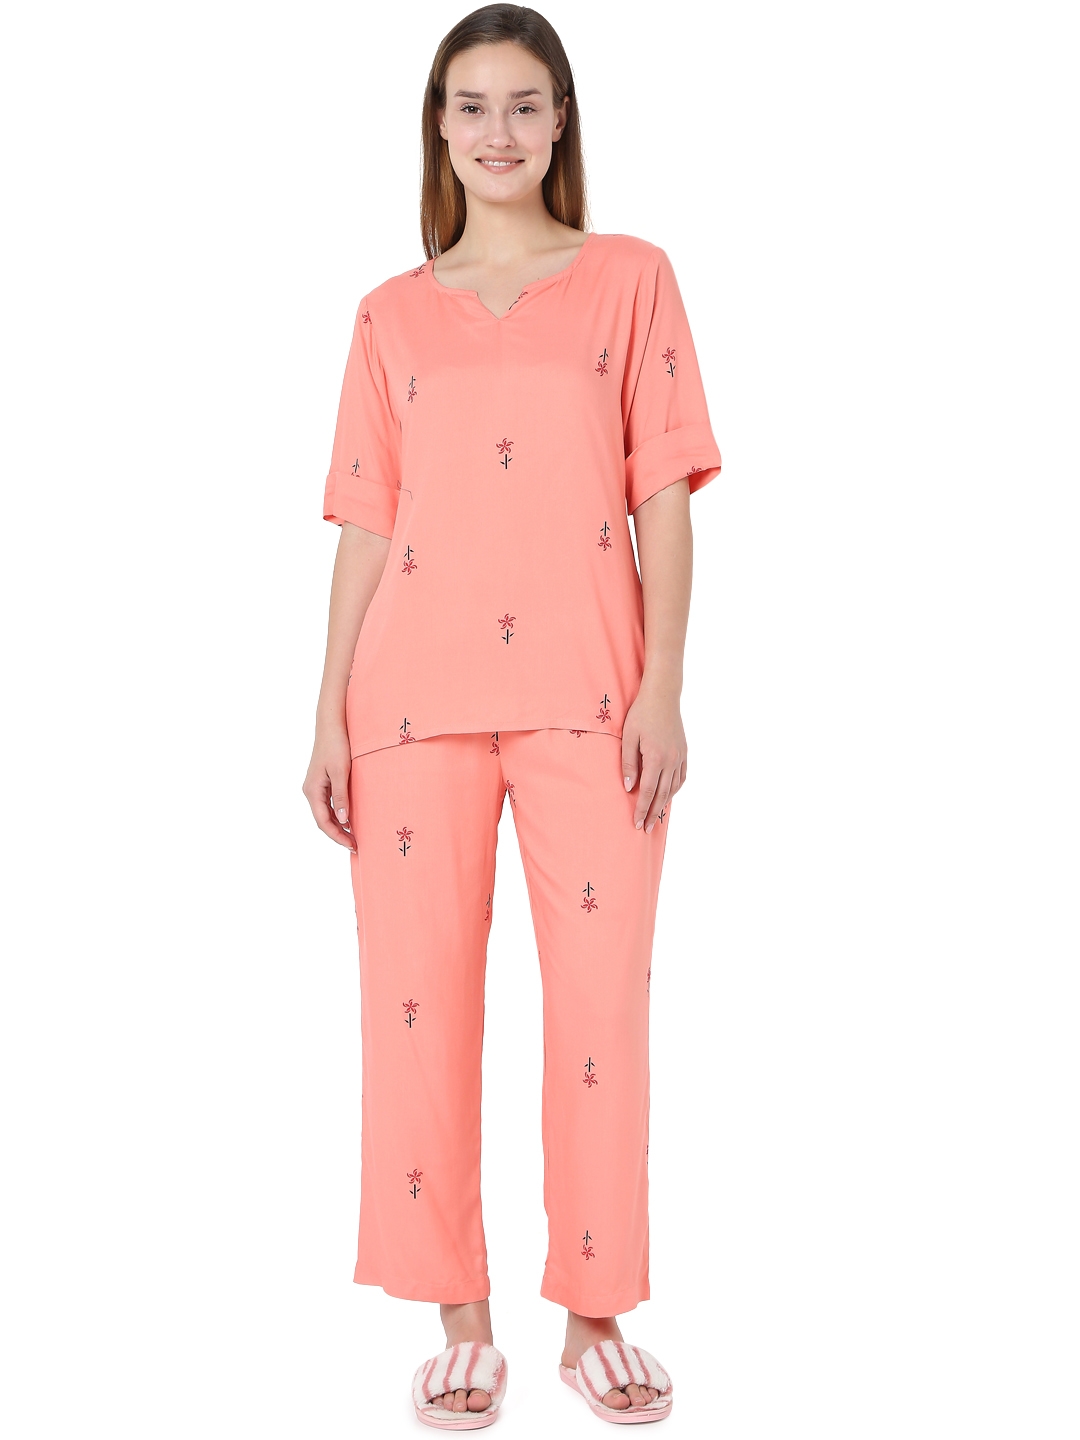 Smarty Pants | Smarty Pants women's cotton pastel pink floral print night suit. 